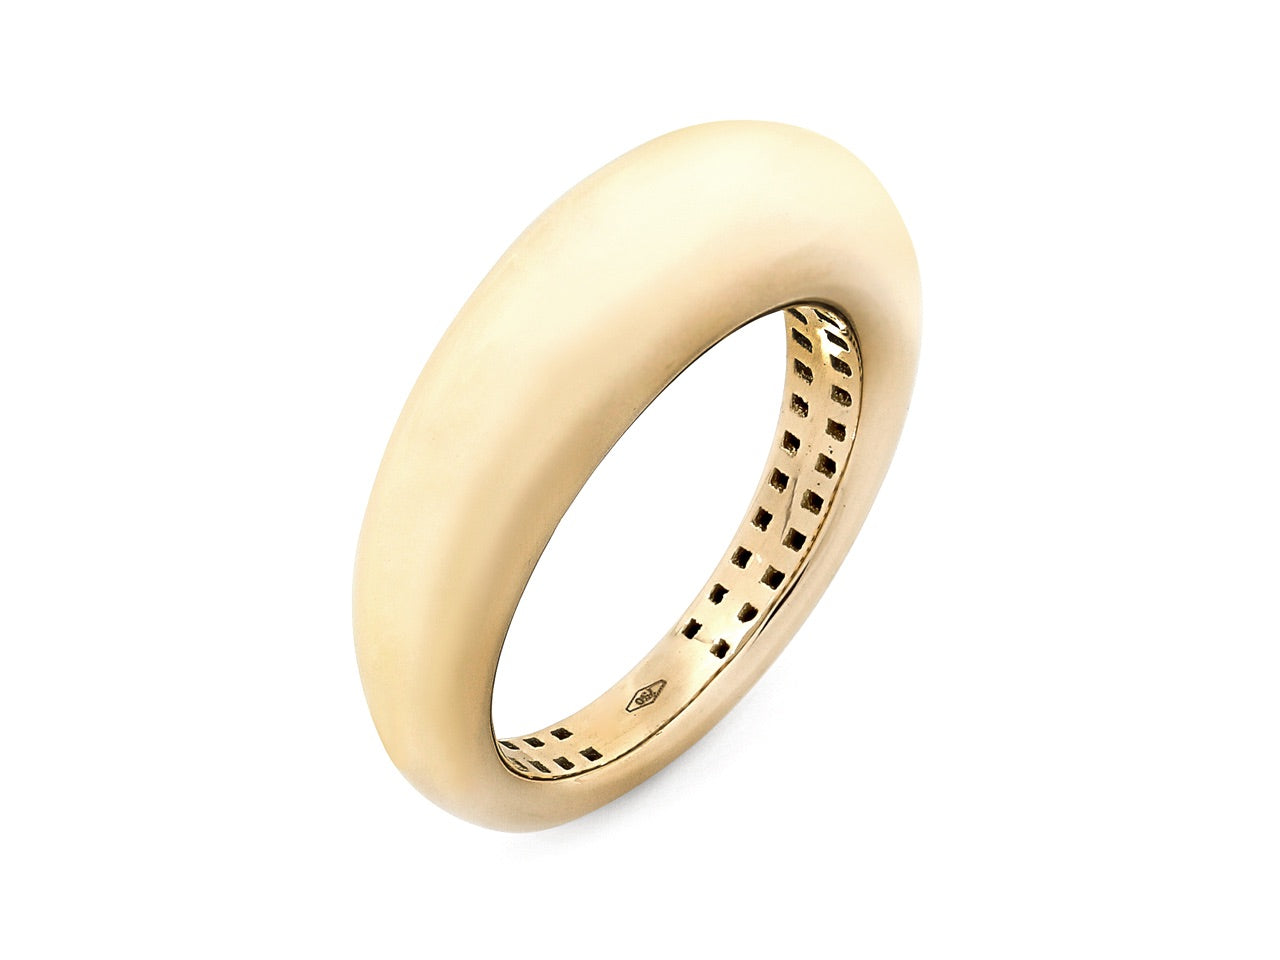 Bombé Gold Ring in 18K, by Beladora